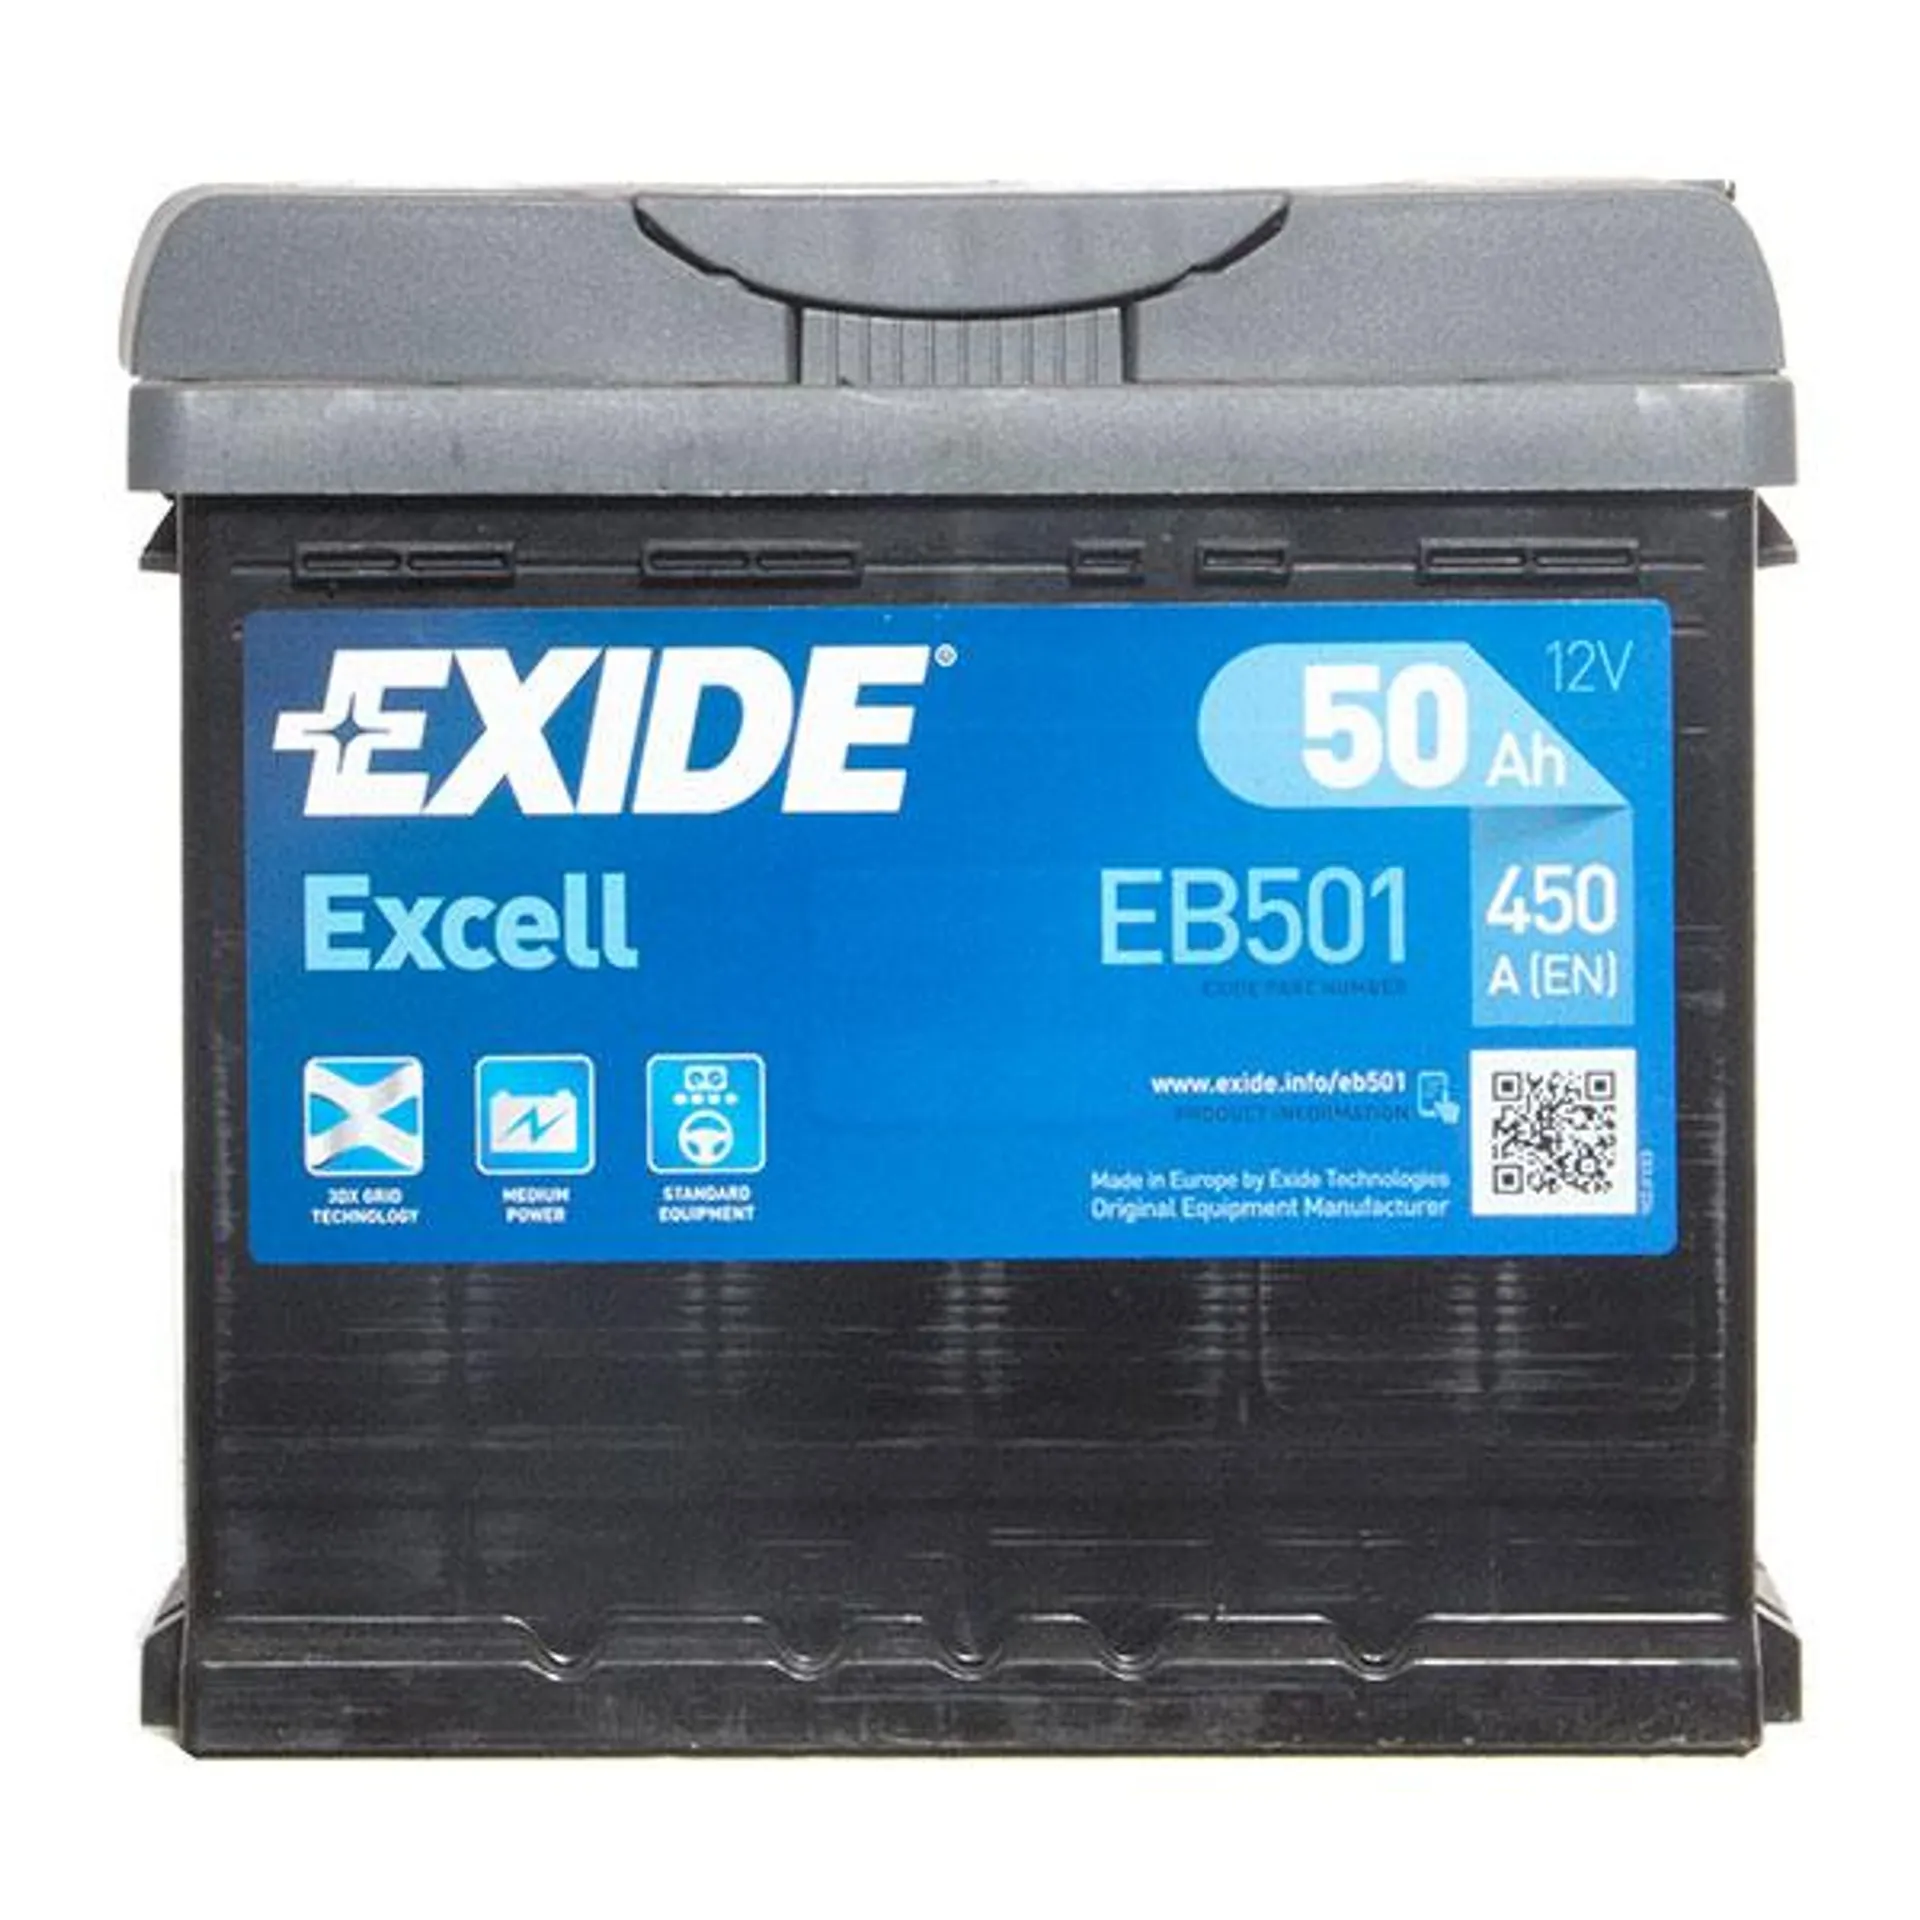 Exide Excel 077 Car Battery - 3 Year Guarantee